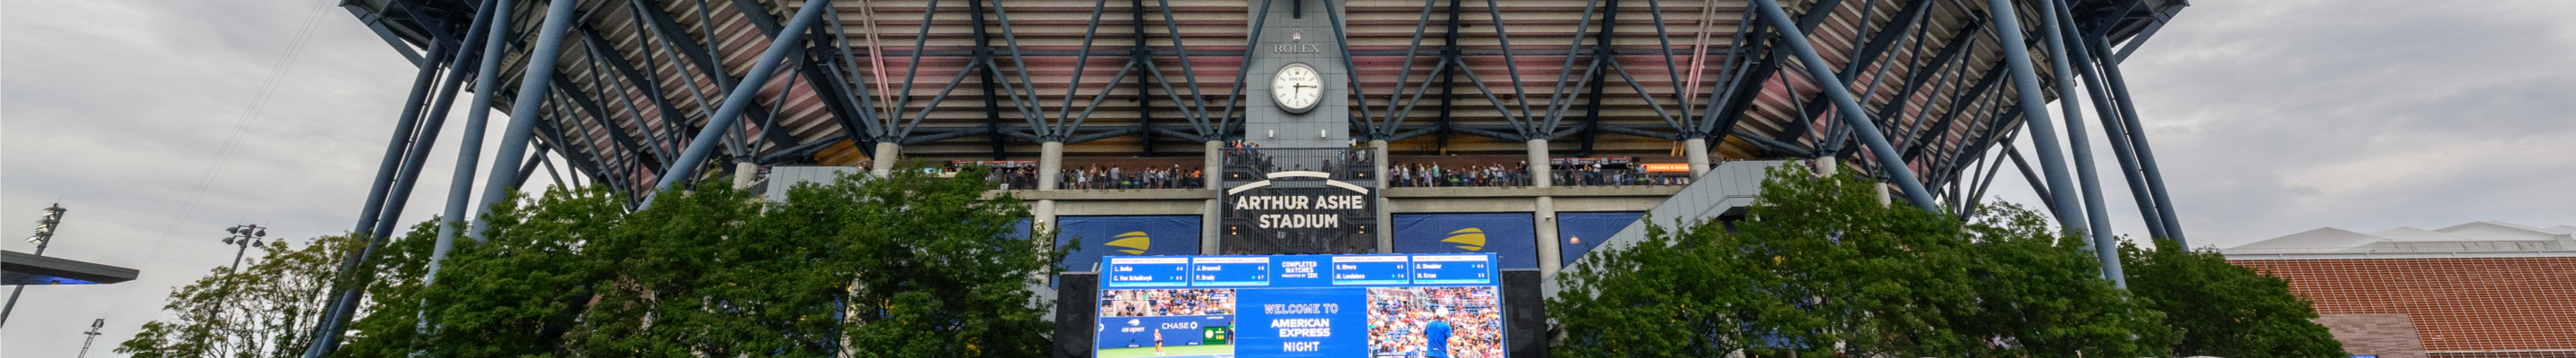 Arthur Ashe Stadium Rolex watch clock the US Open